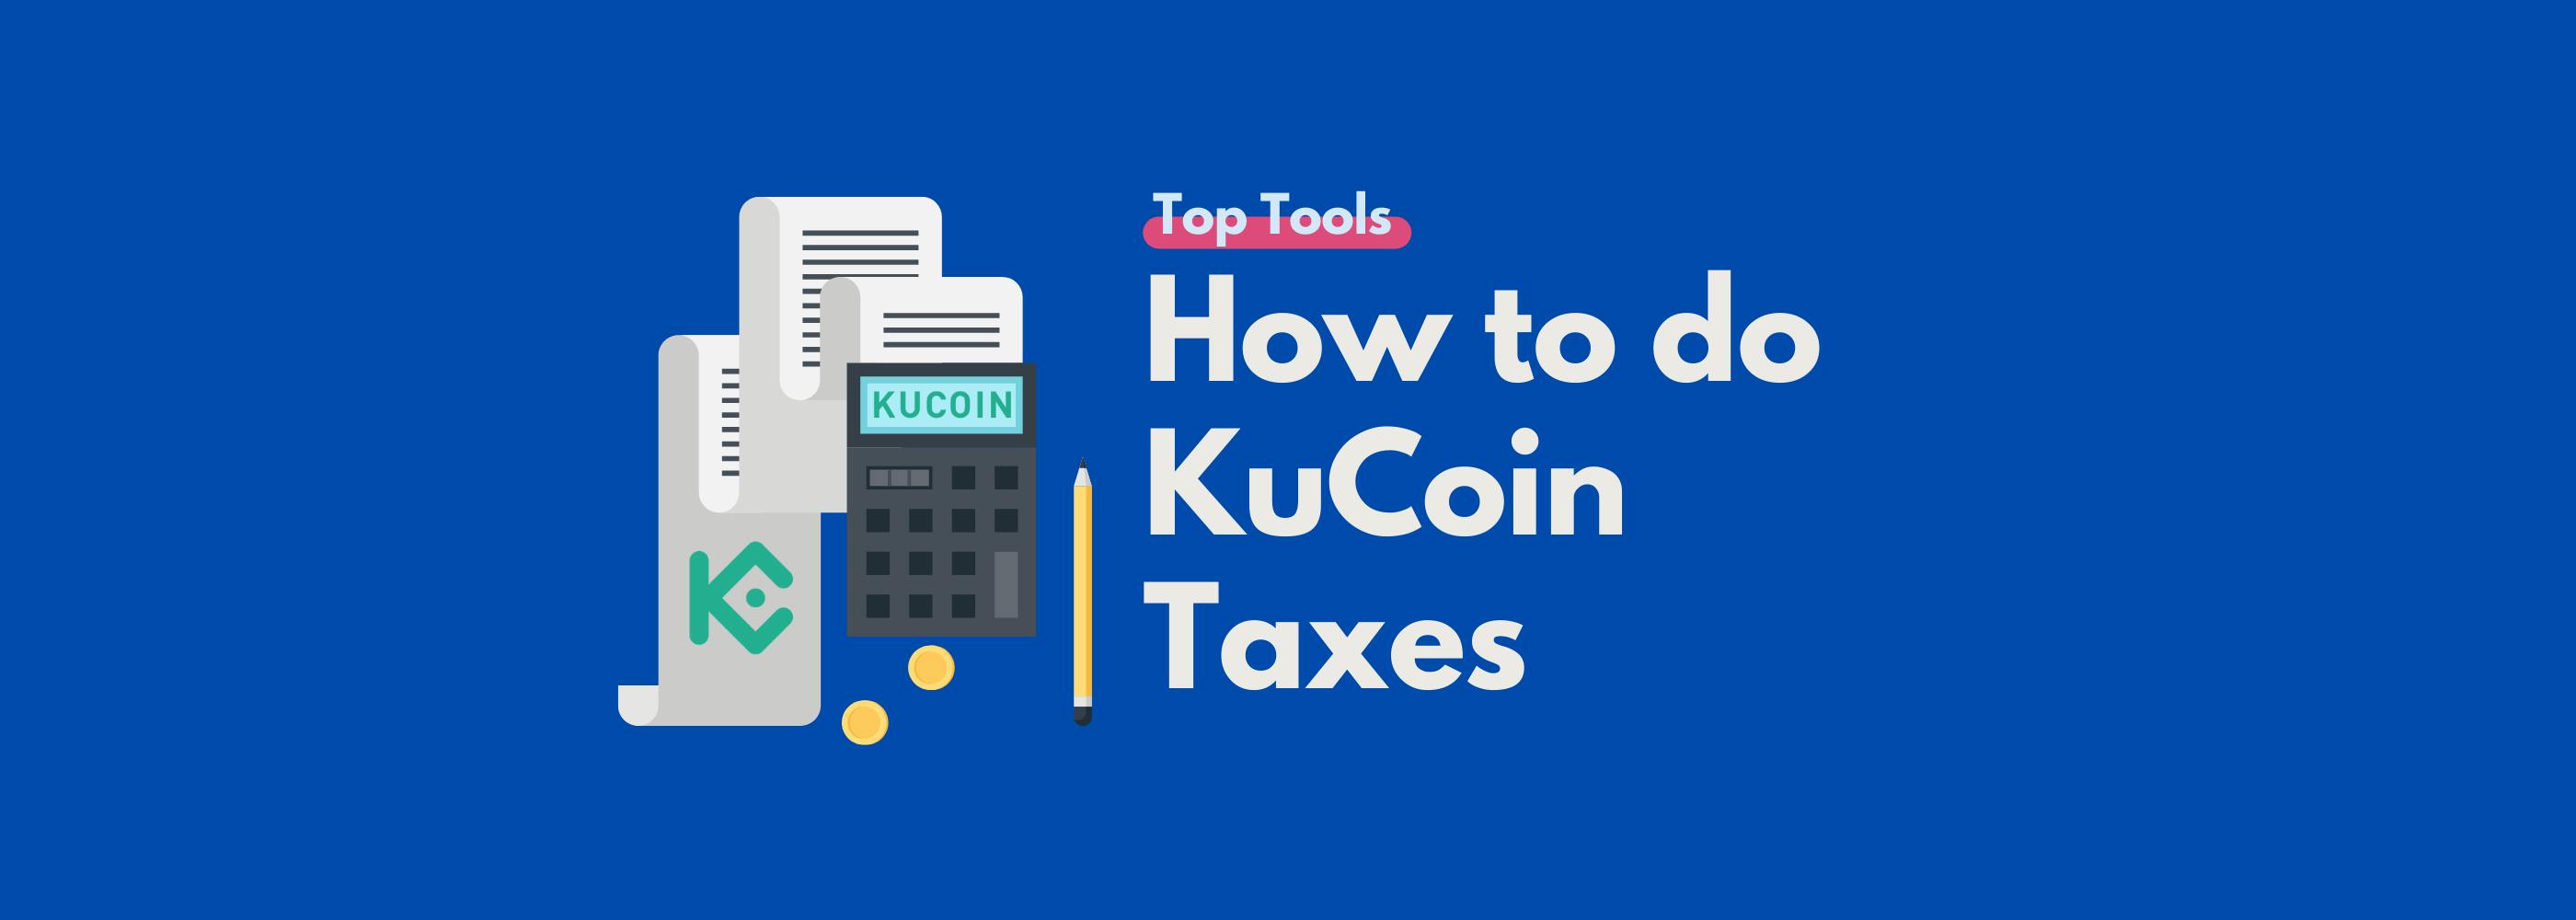 KuCoin tax guide